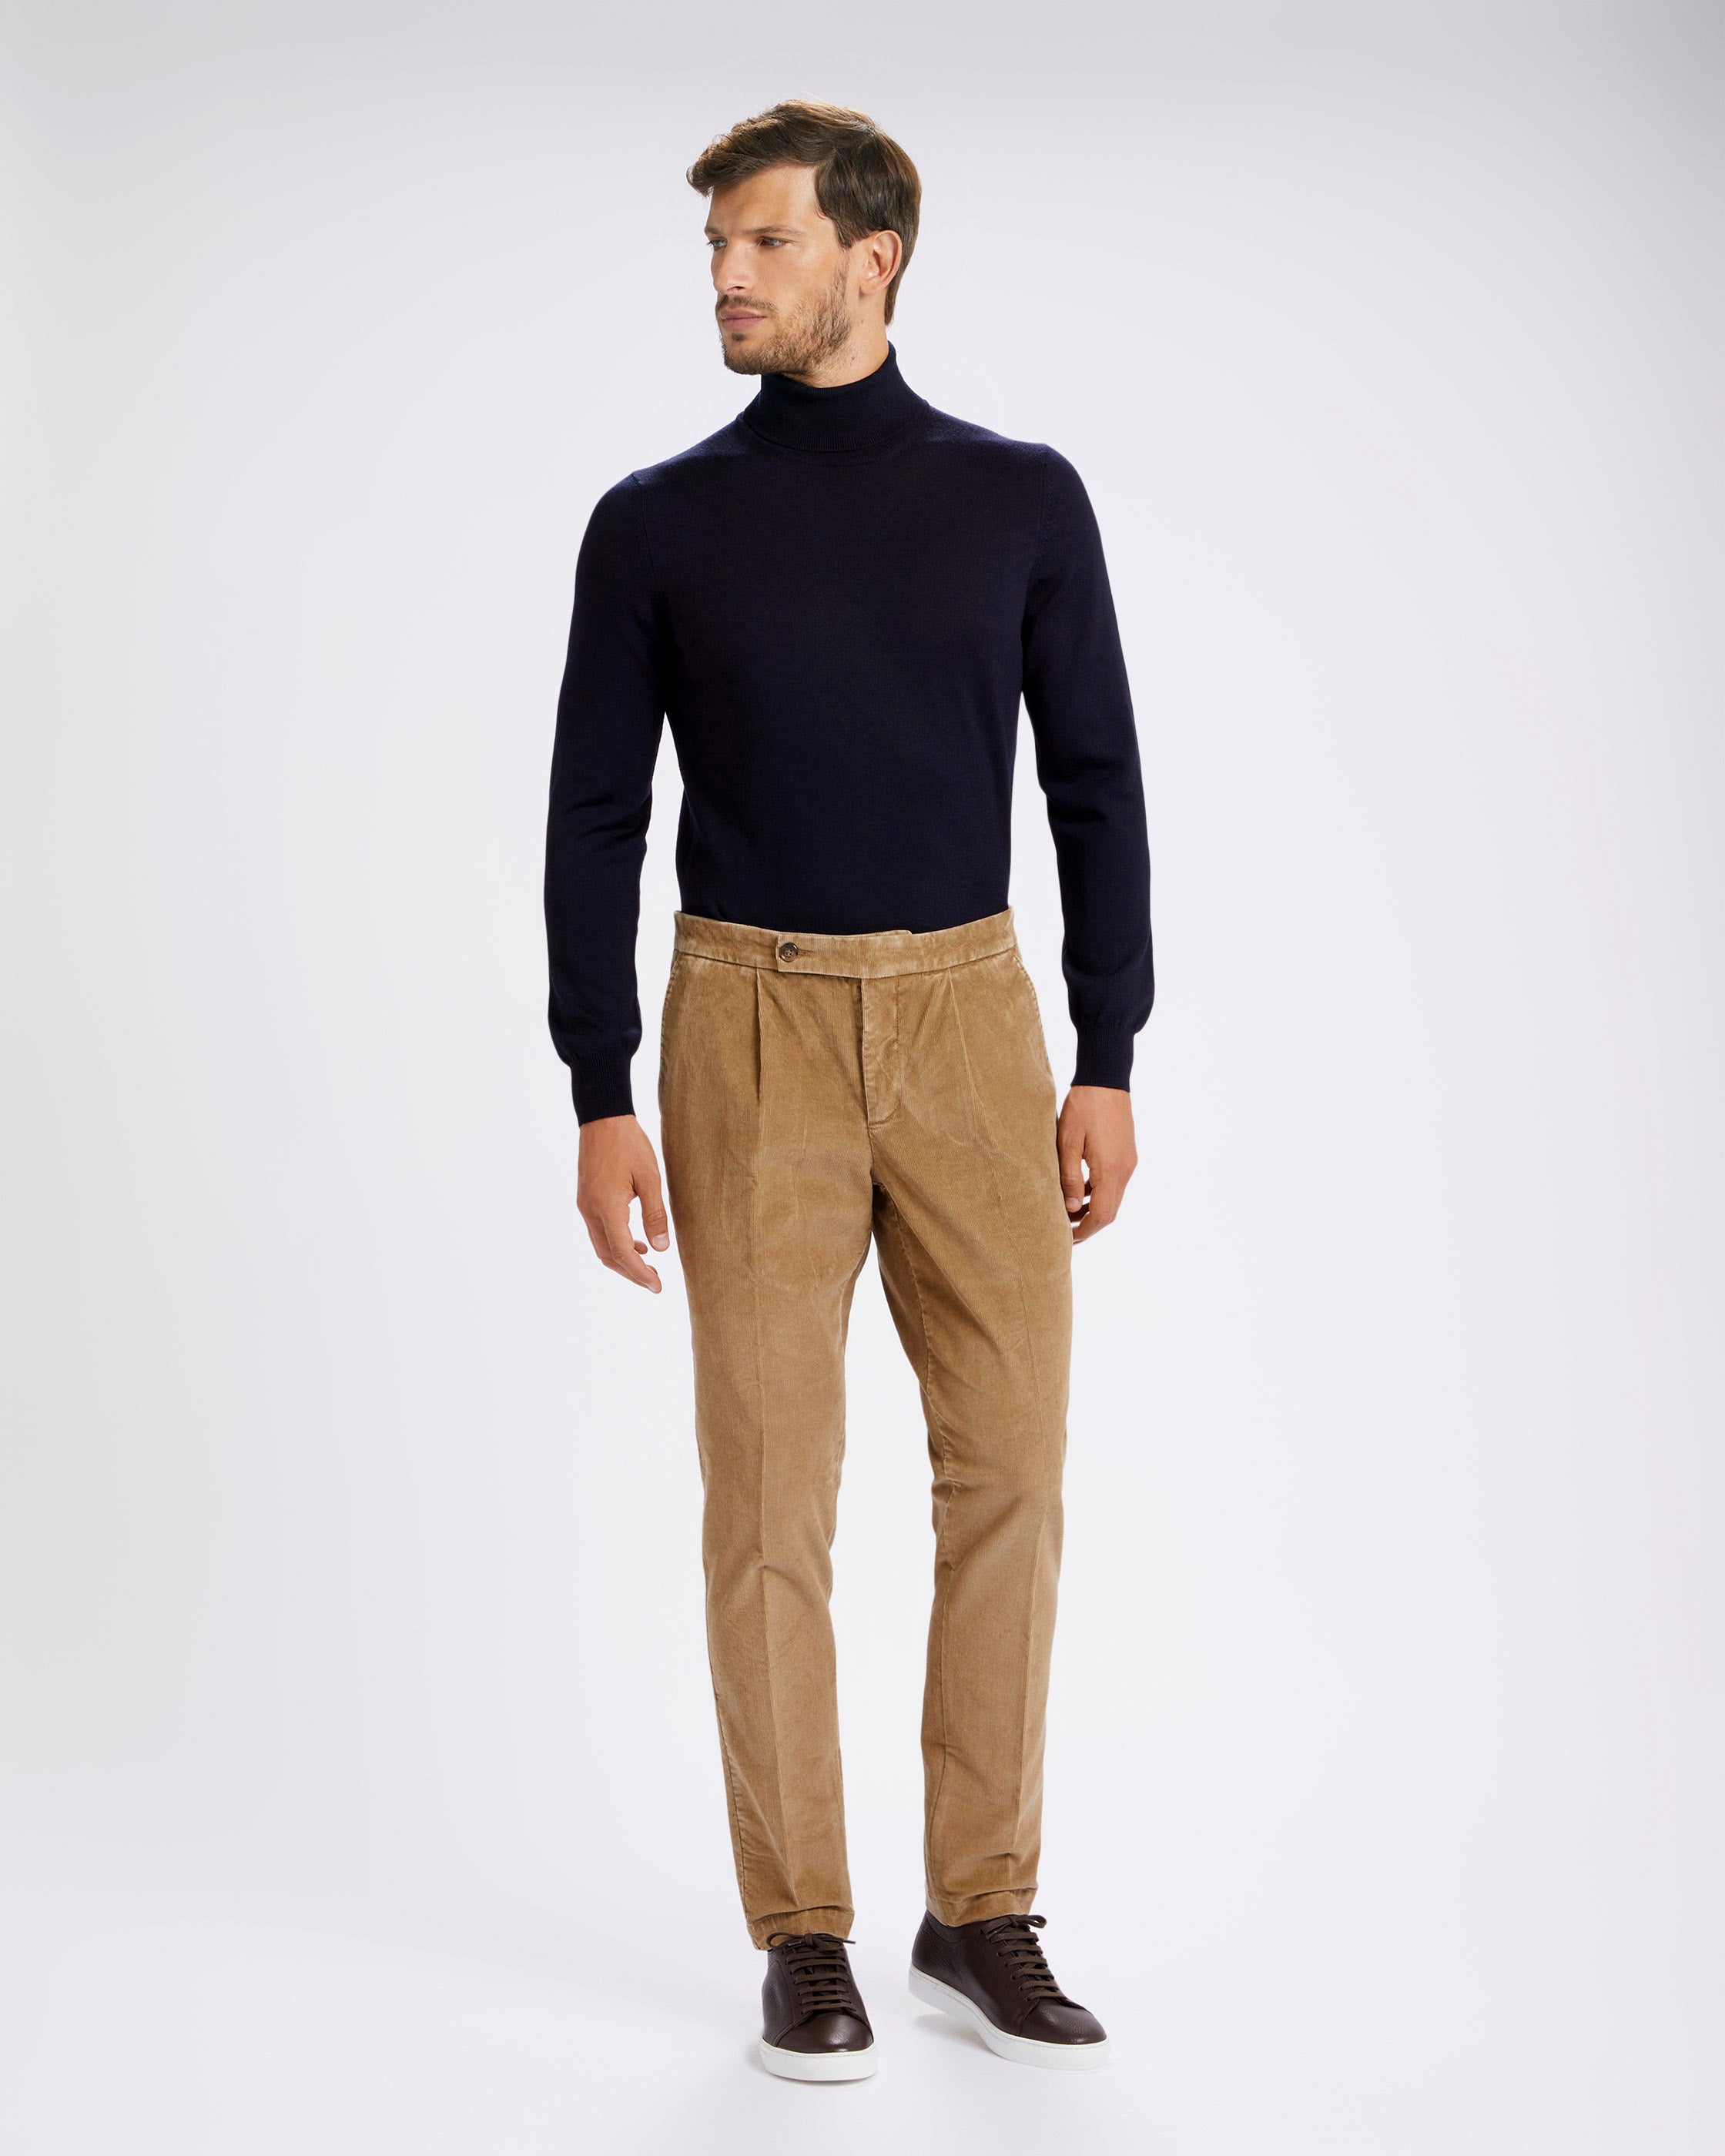 Pantalone chino con pince e vita arricciata in velluto millerighe a costa fine pesante beige marrone terra di Siena regular fit product